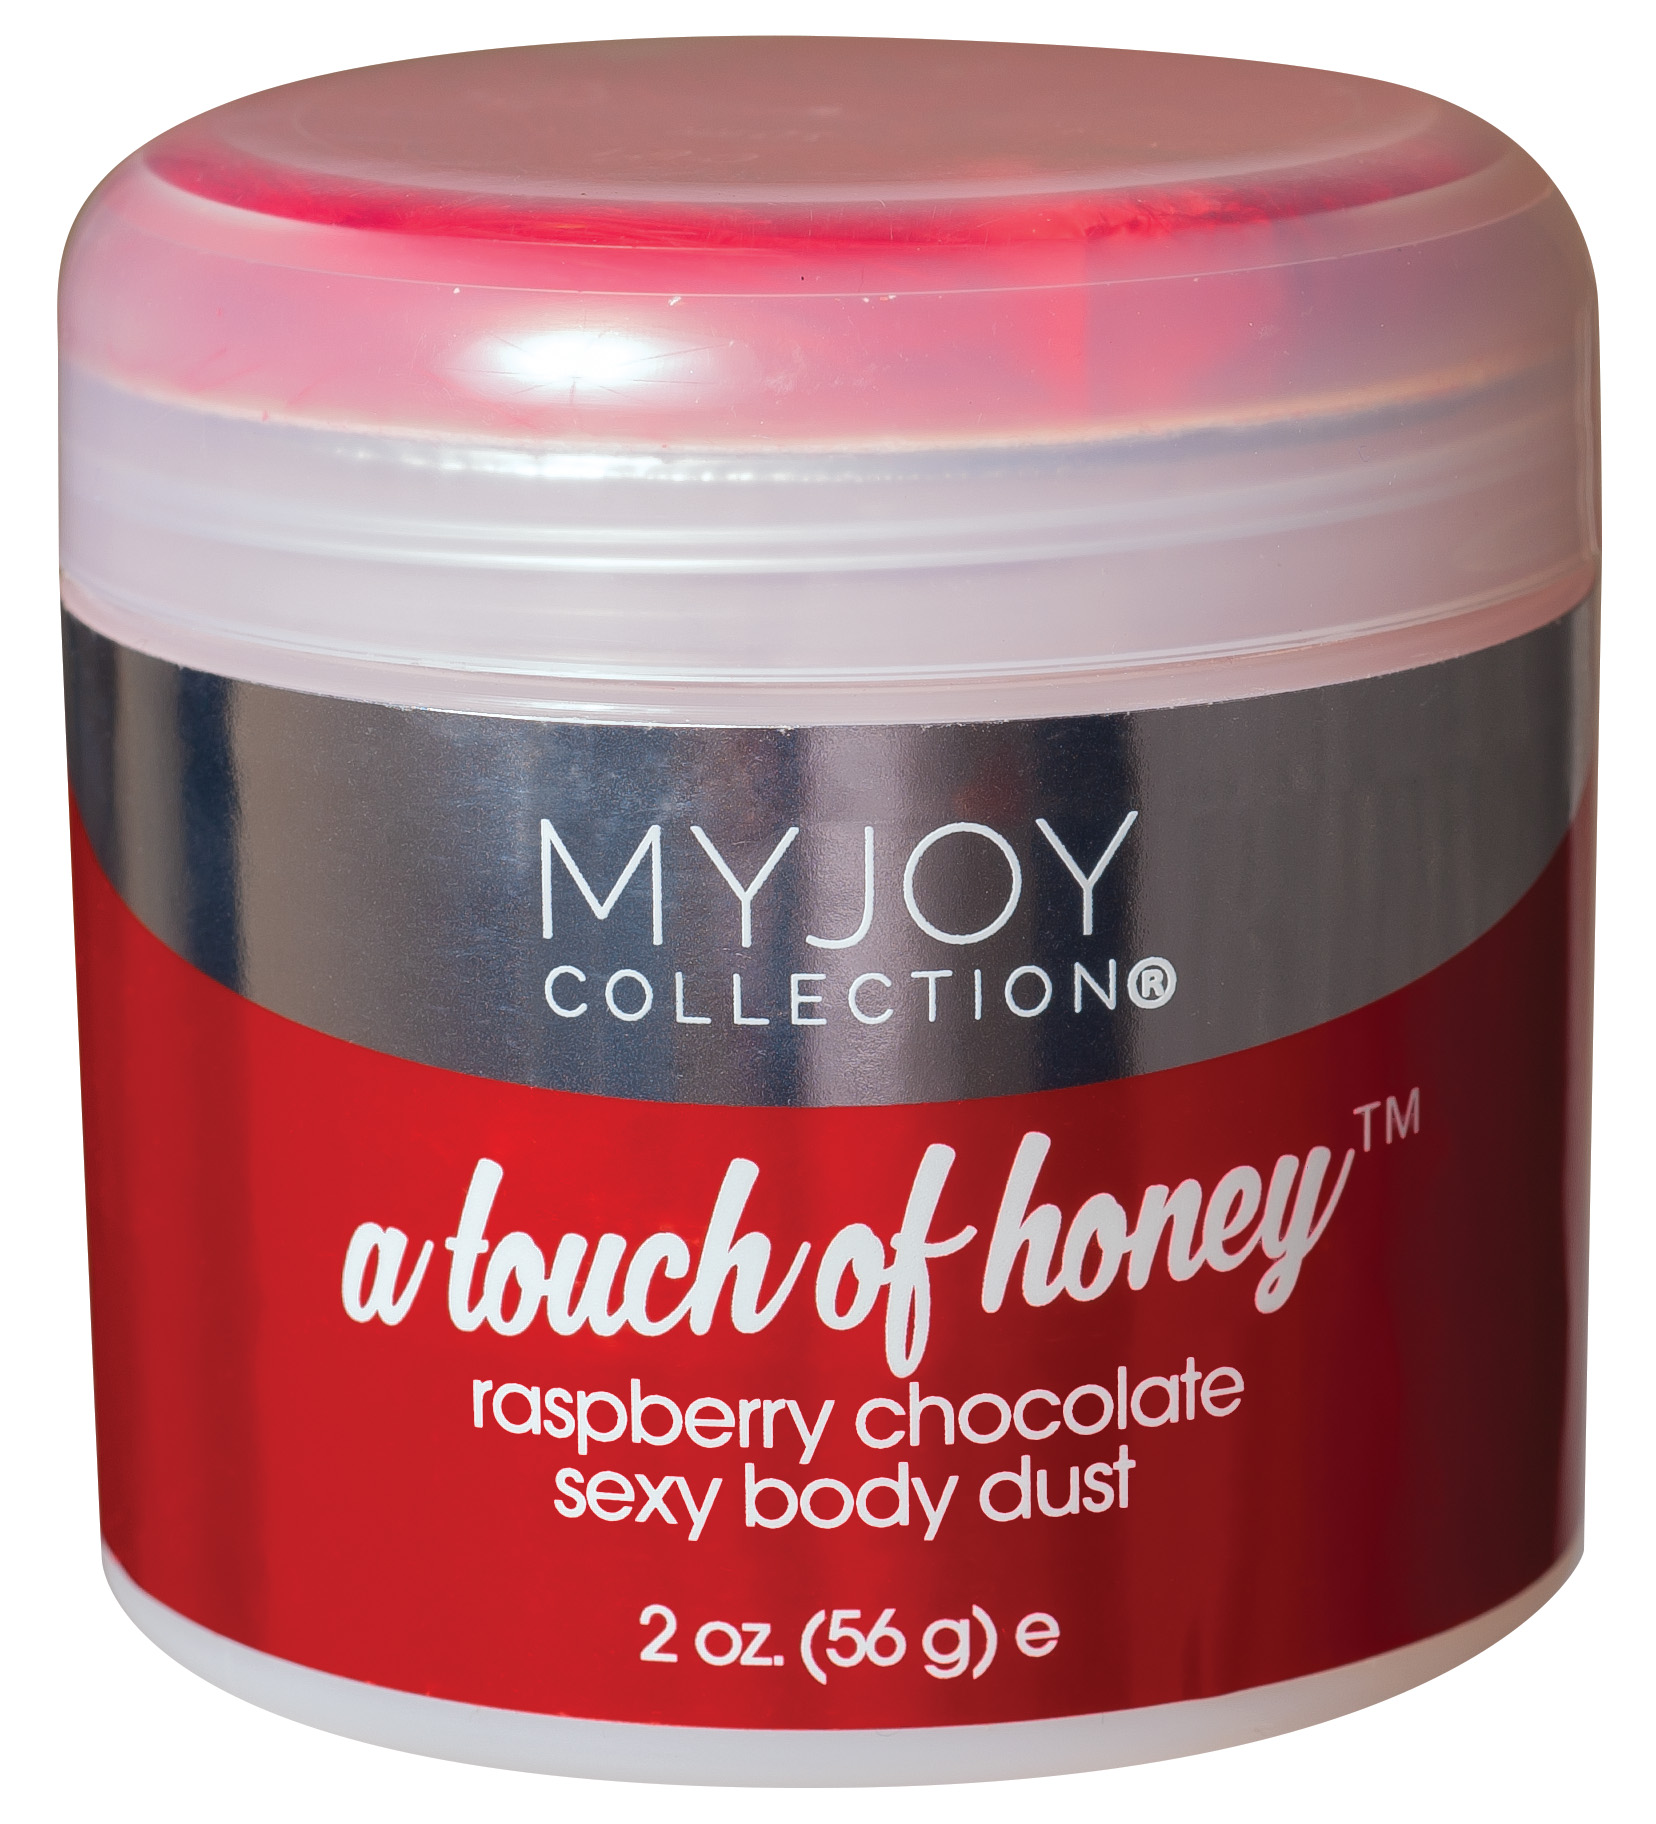 A Touch of Honey - Raspberry Chocolate Sexy Body Dust - 2 Oz. Jar (56g)